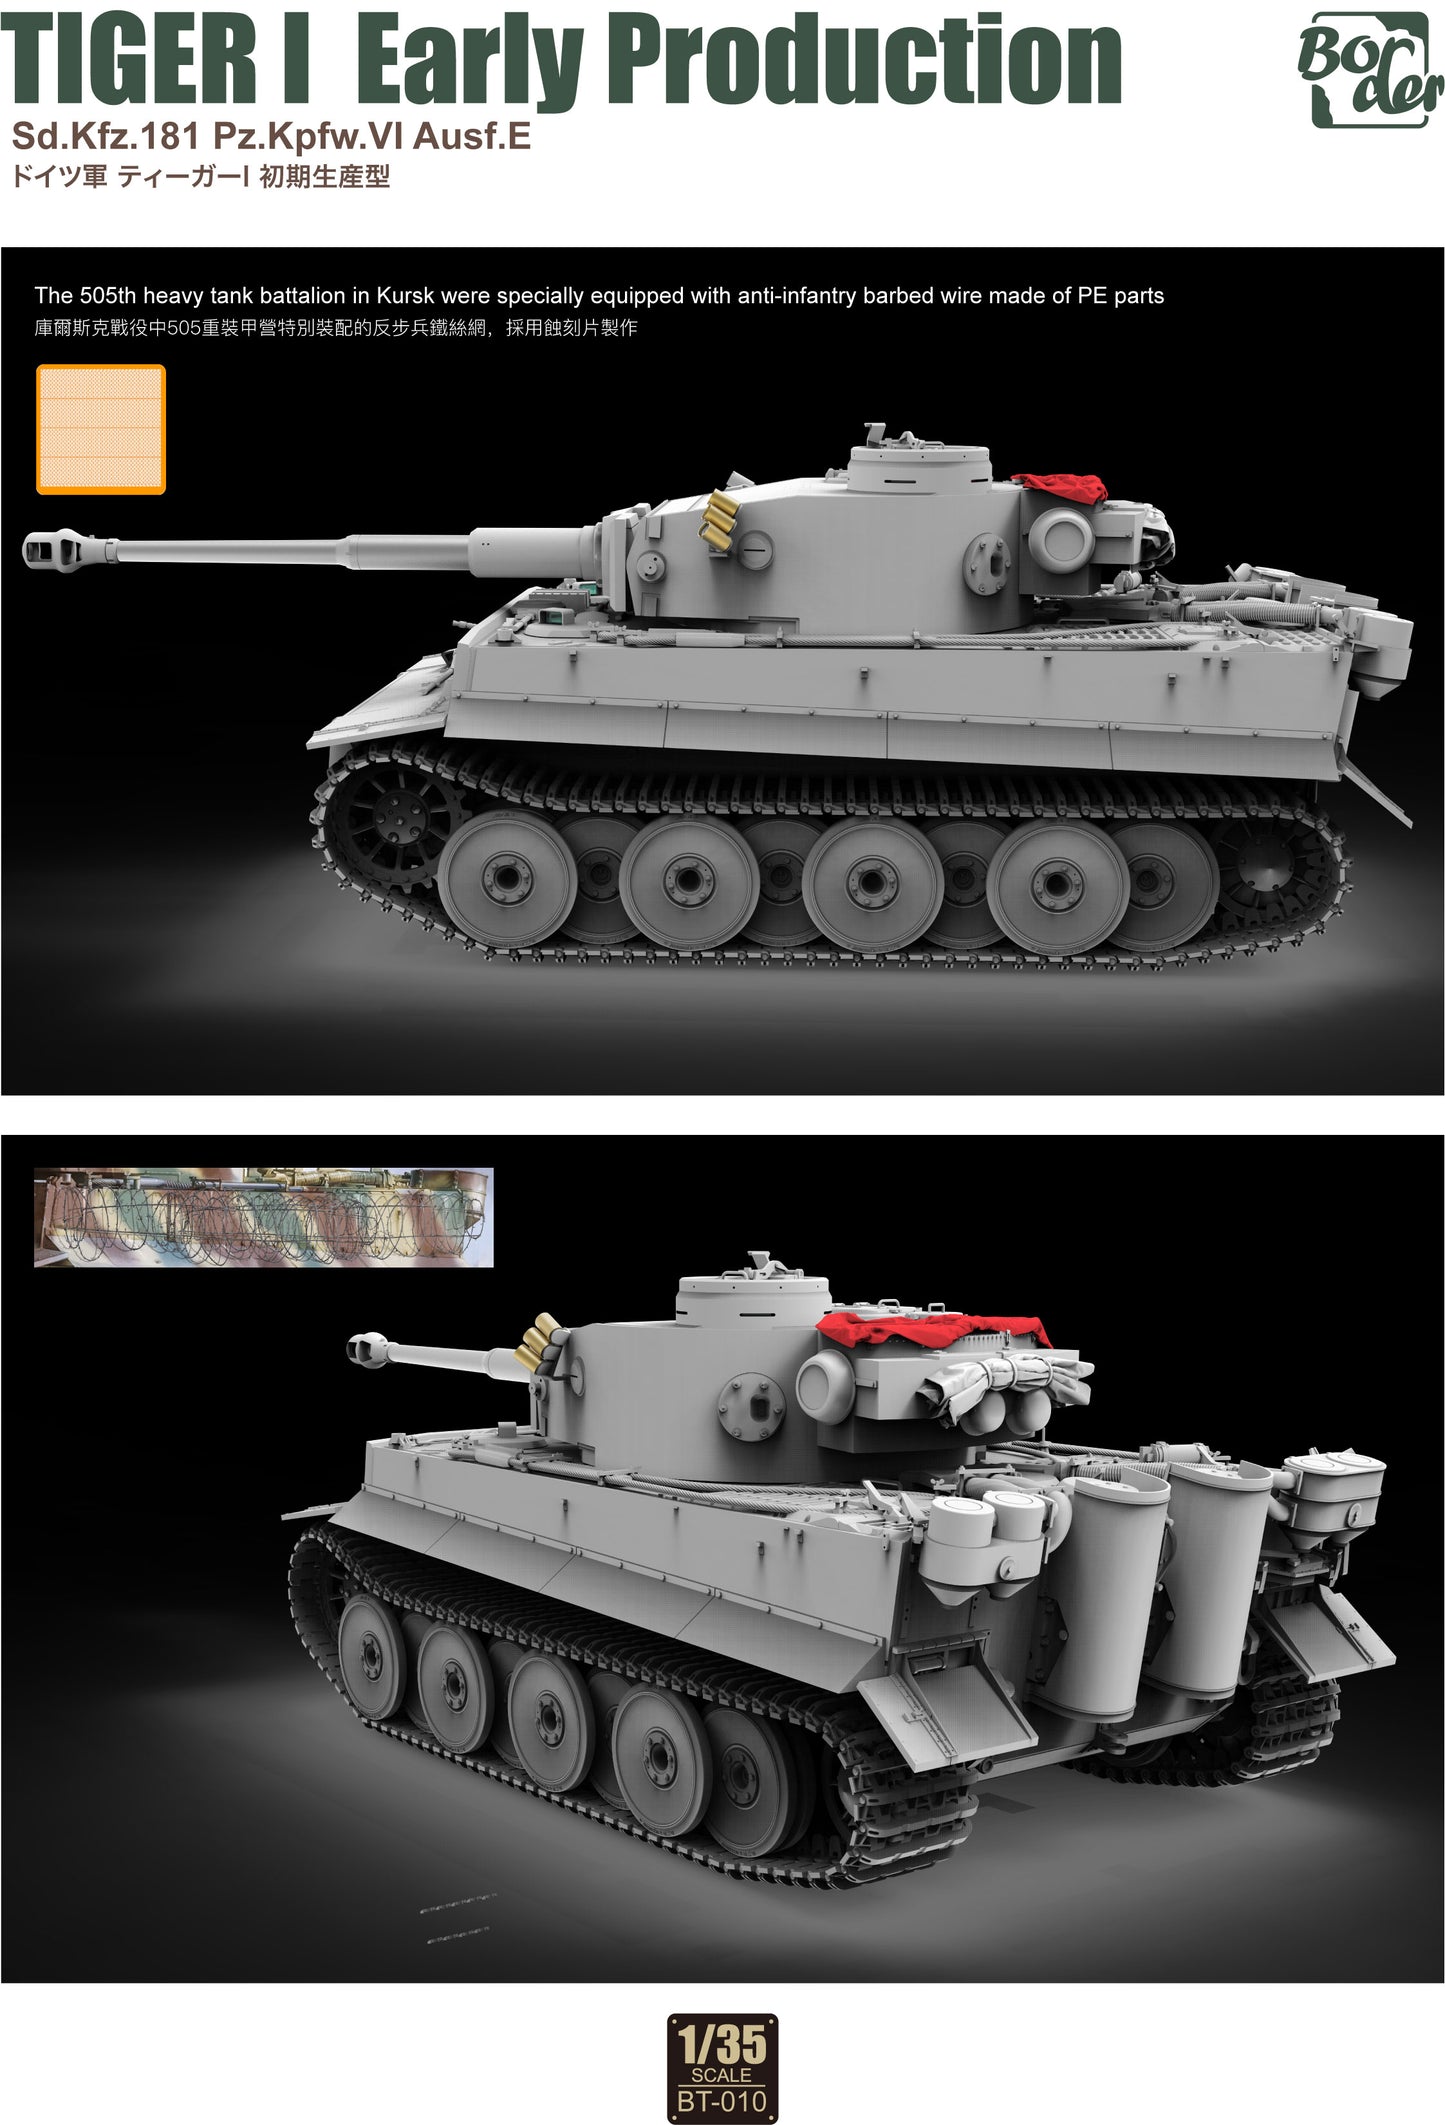 BDR-BT010 -  немецкий тяжелый танк Sd.Kfz. 181 Pz.Kpfw. IV Ausf. E Tiger I ("Тигр")